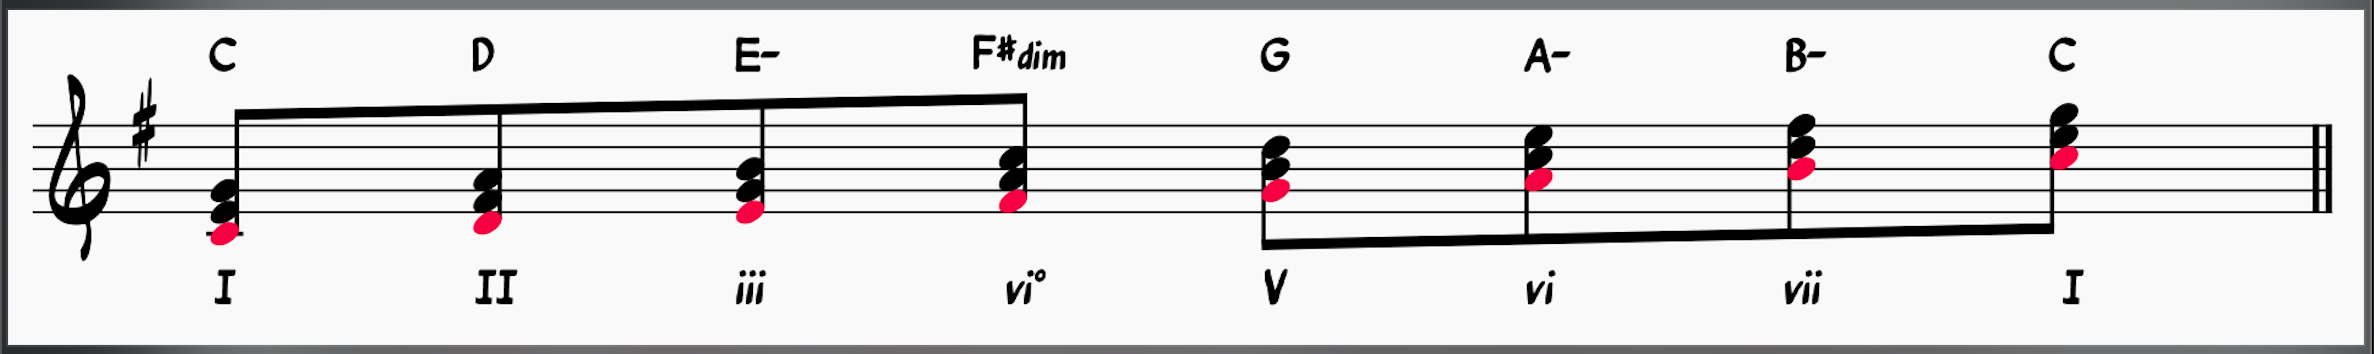 Chords in C Lydian 